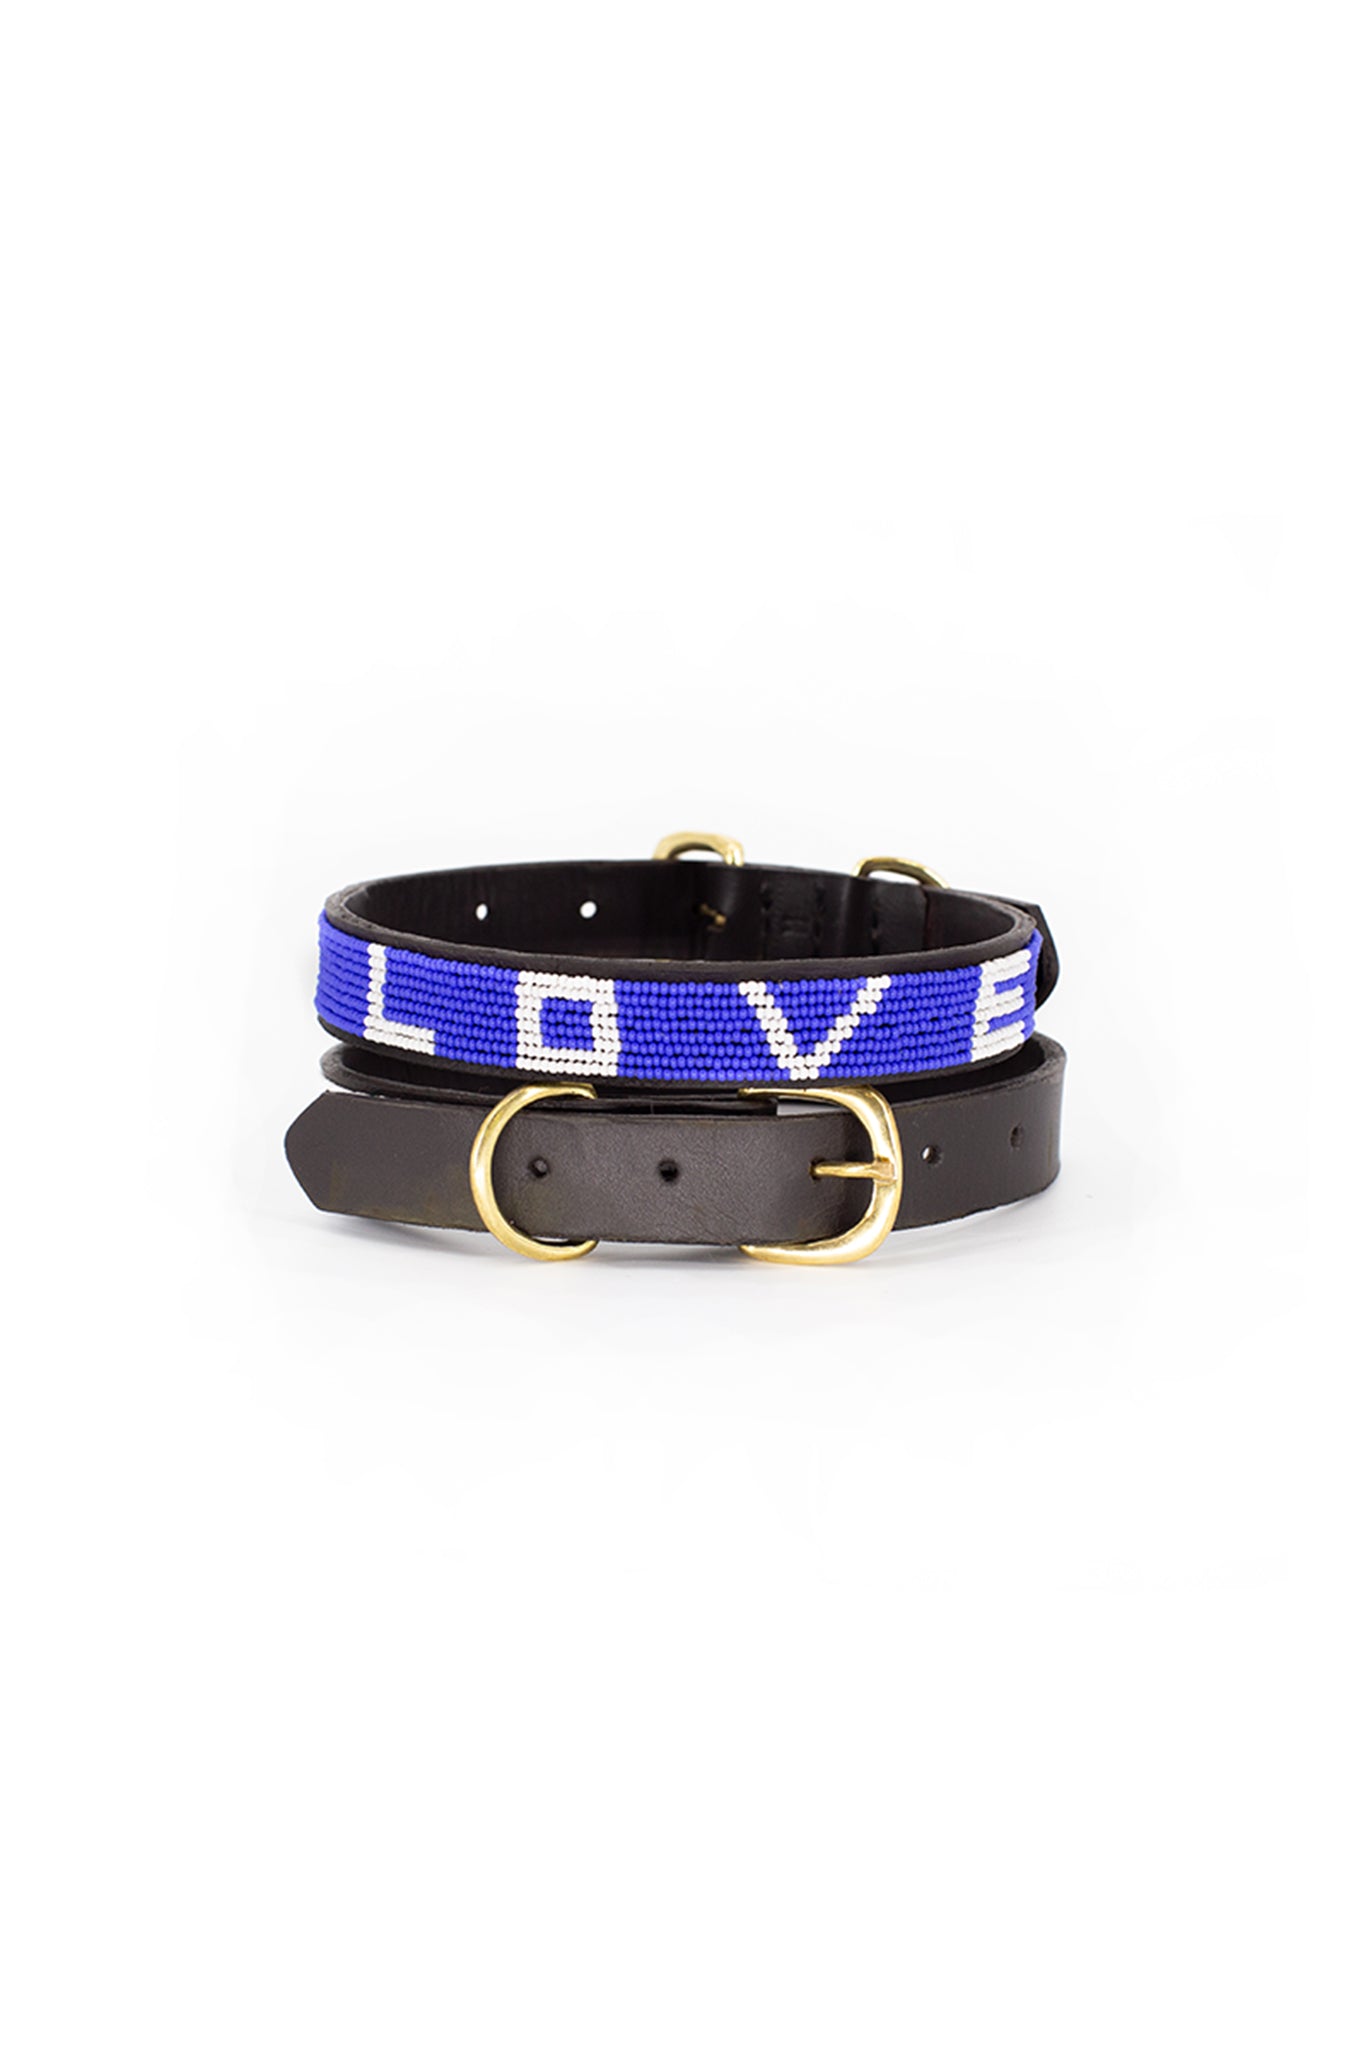 Cobalt 'Love' Dog Collar